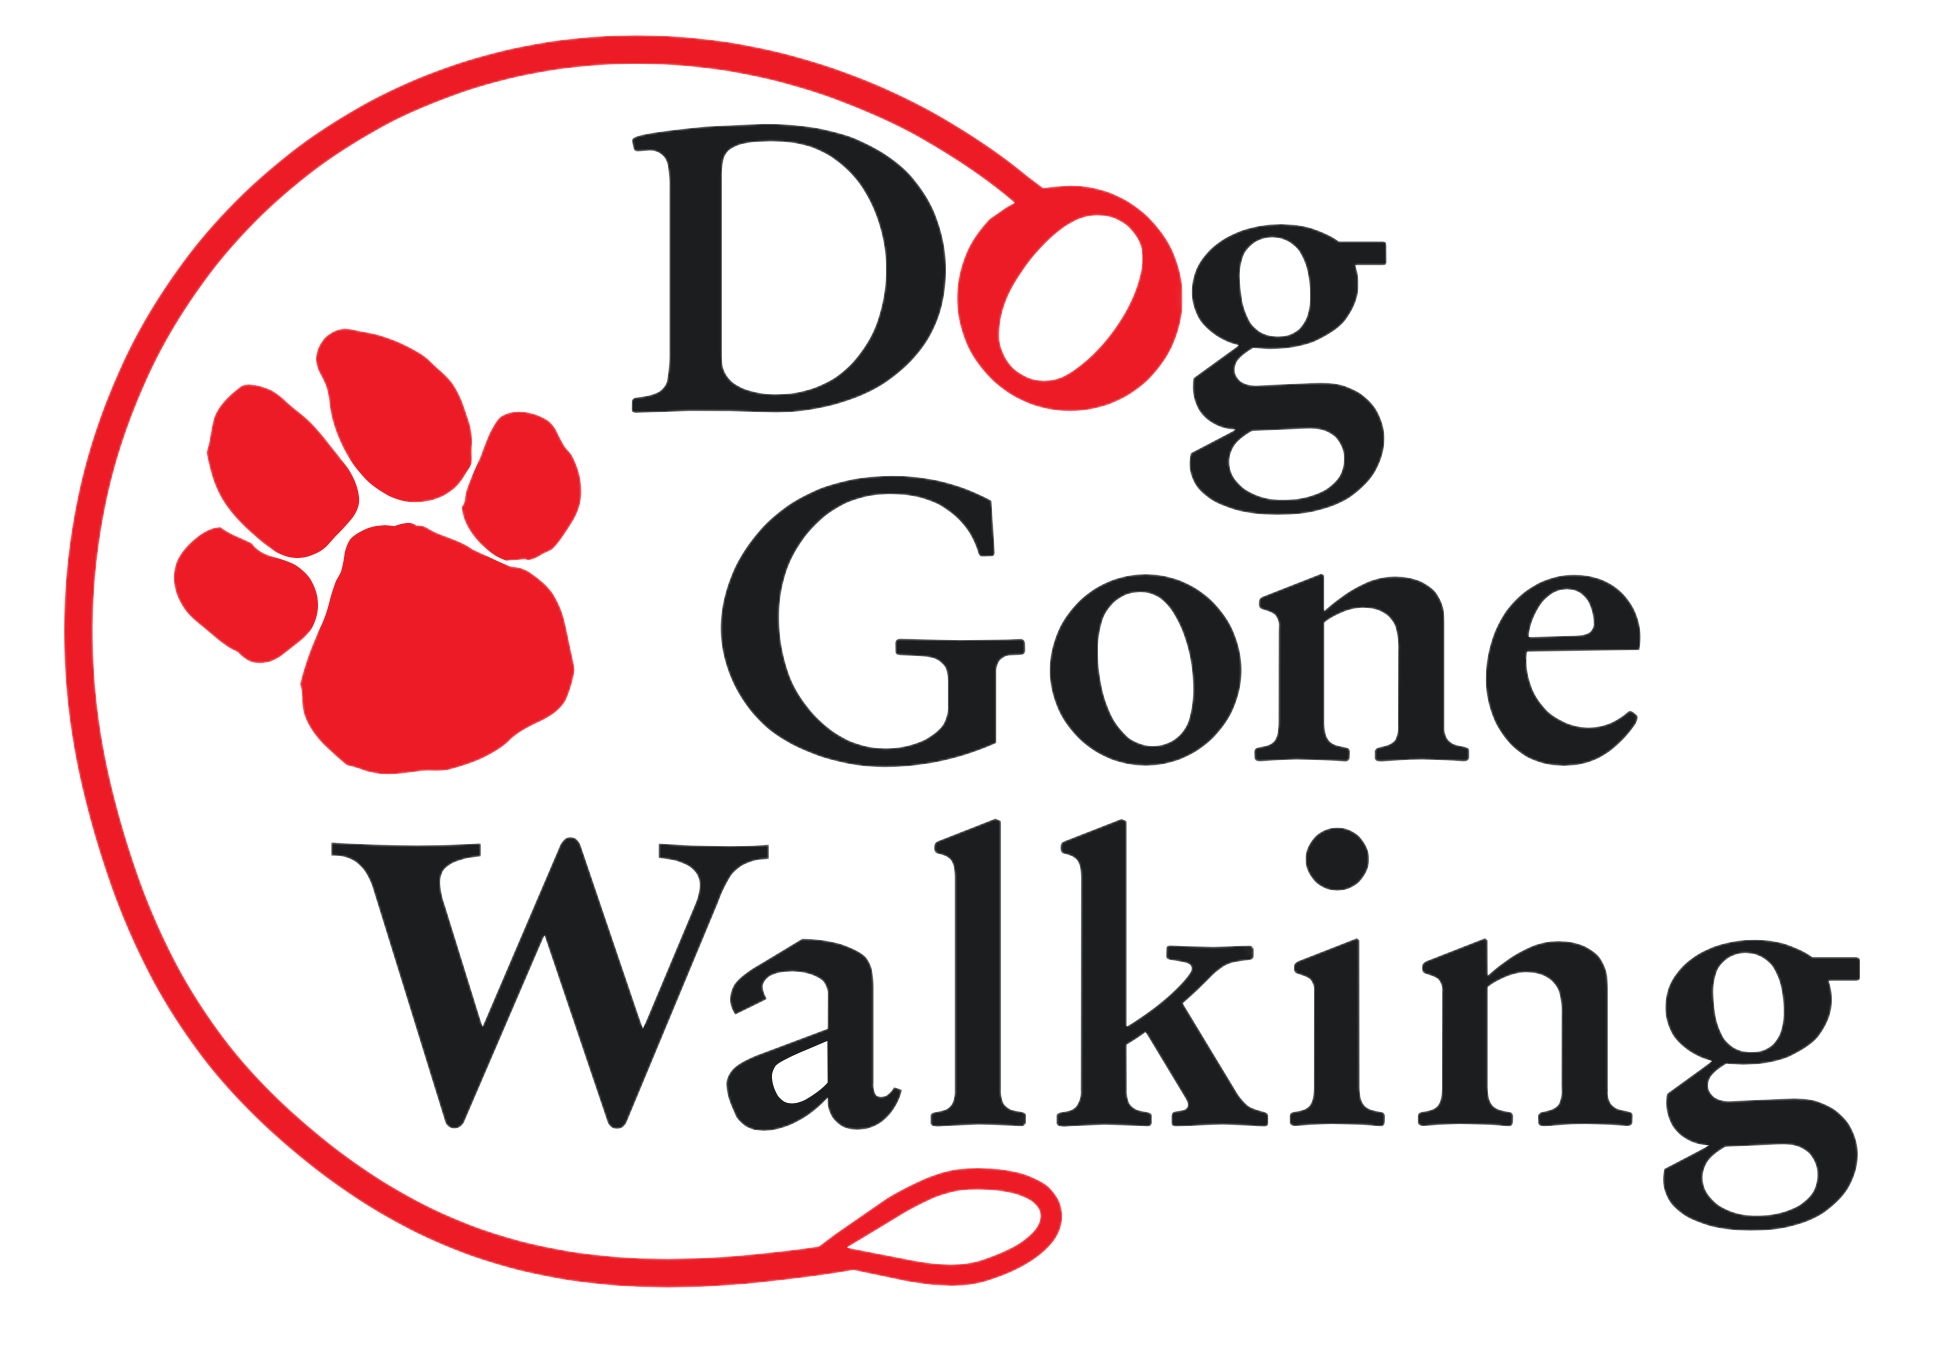 Dog Gone Walking